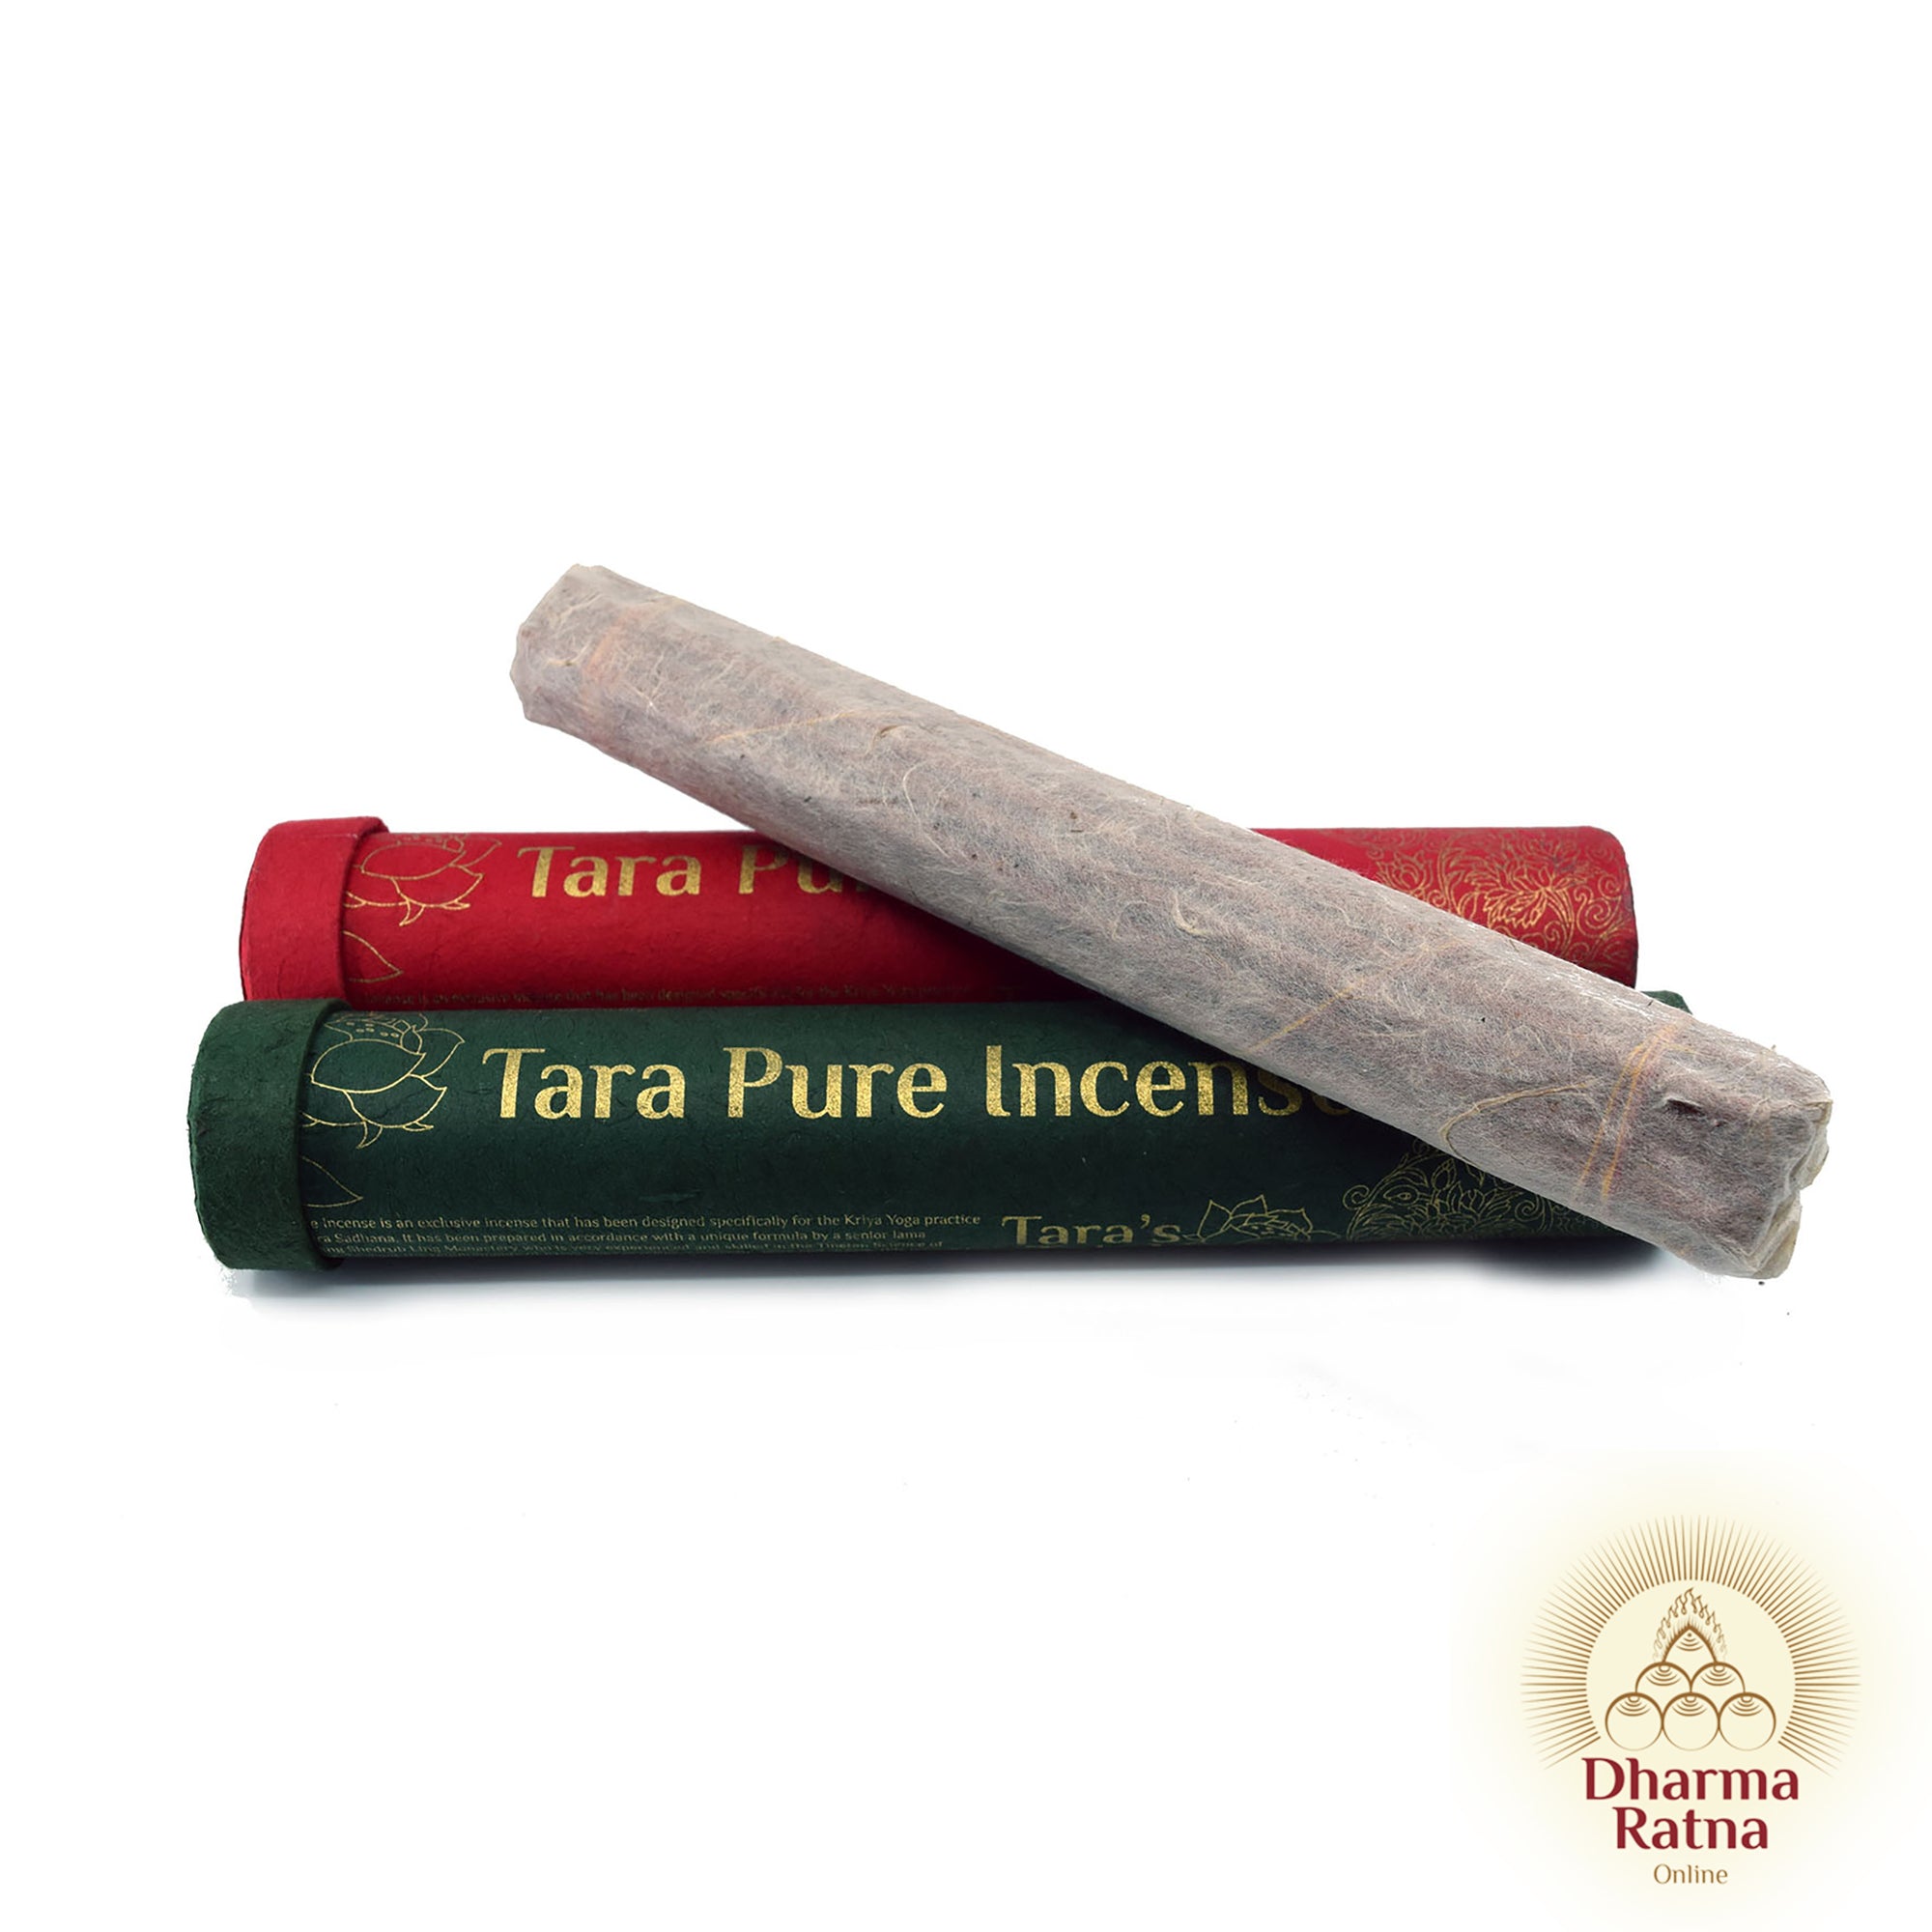 Tara Pure Incense